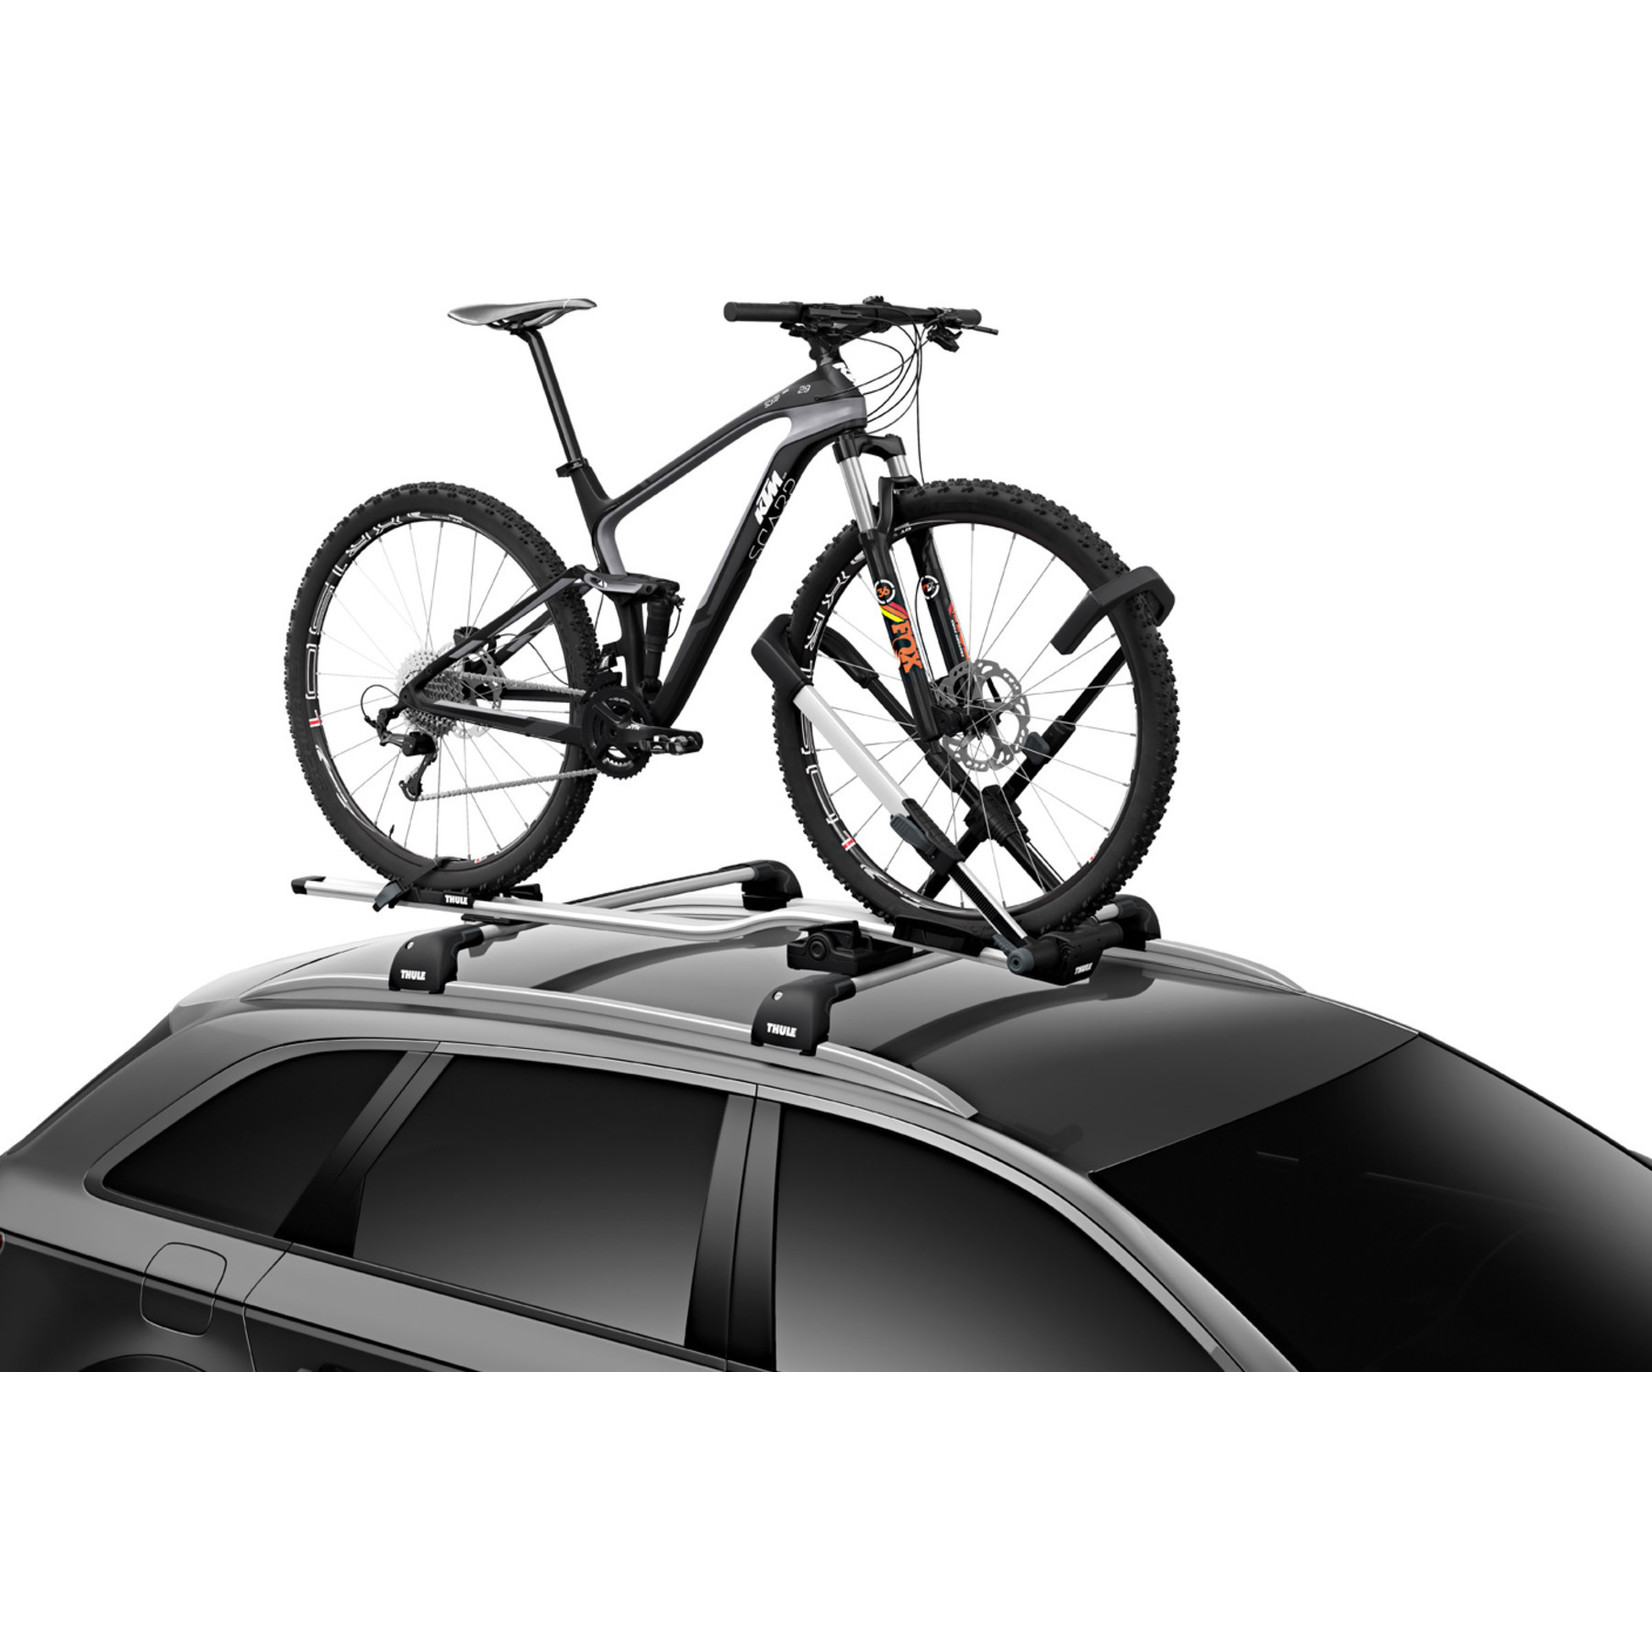 Thule Thule UpRide 599001 Roof Mounted Bike Rack - Black/Aluminium